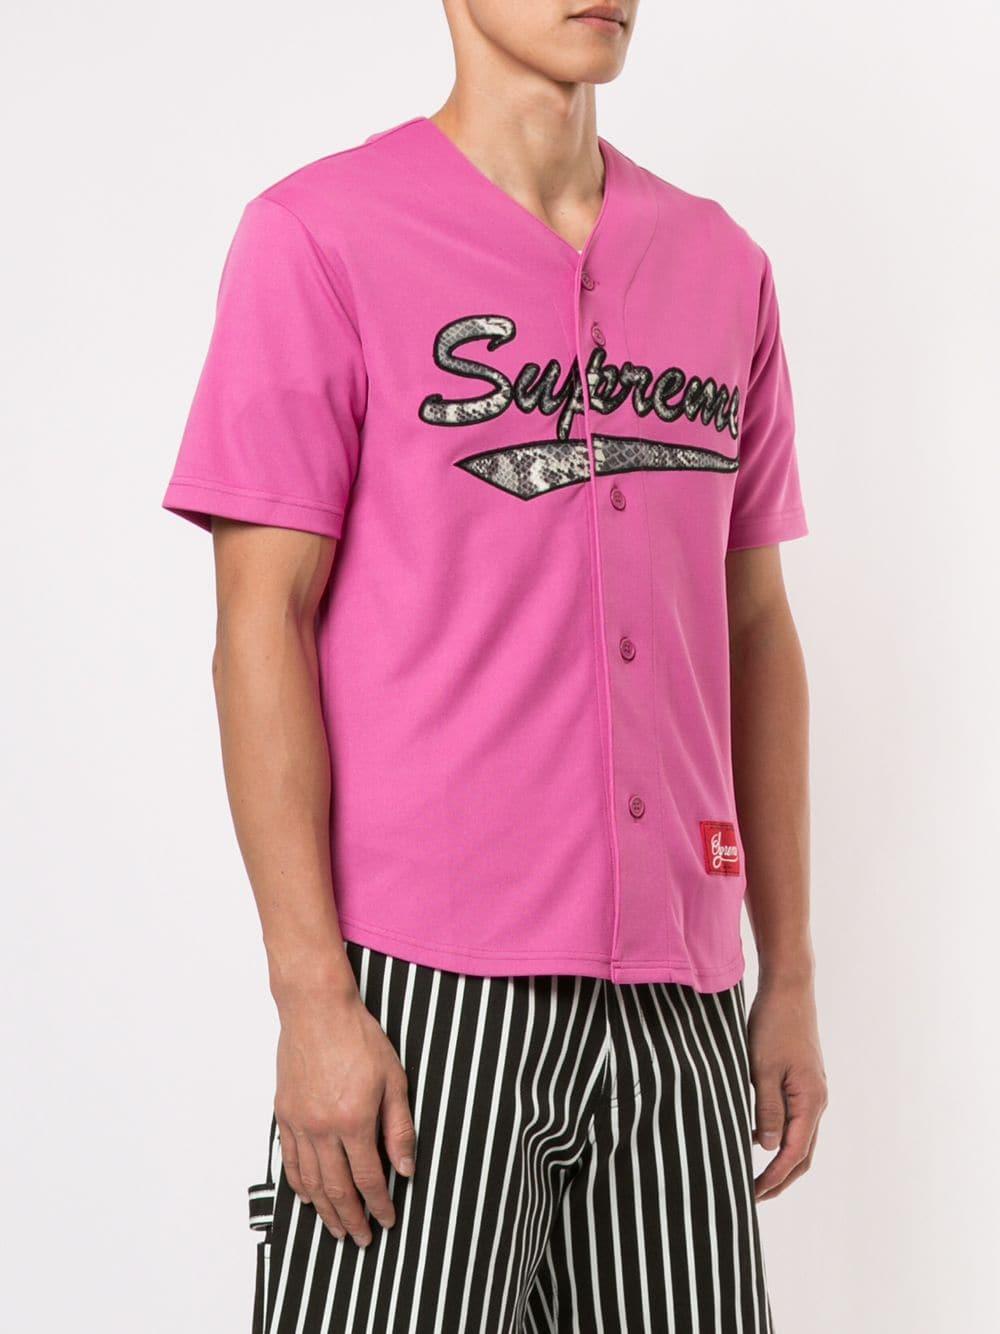 Supreme Logo Baseball Jersey in Pink for Men